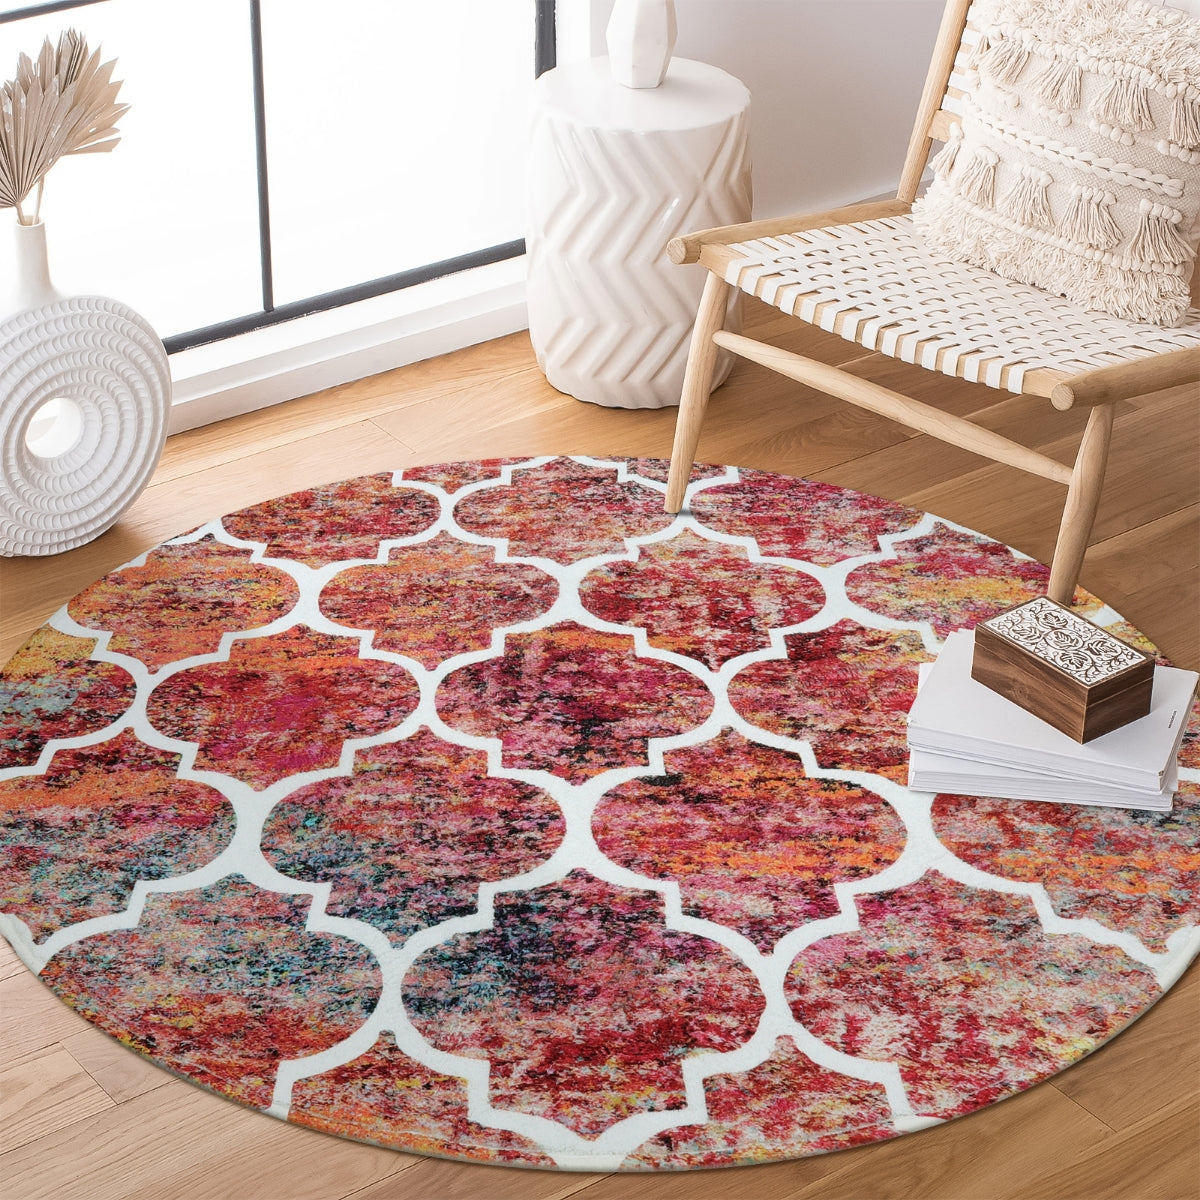 colorful moroccan rug